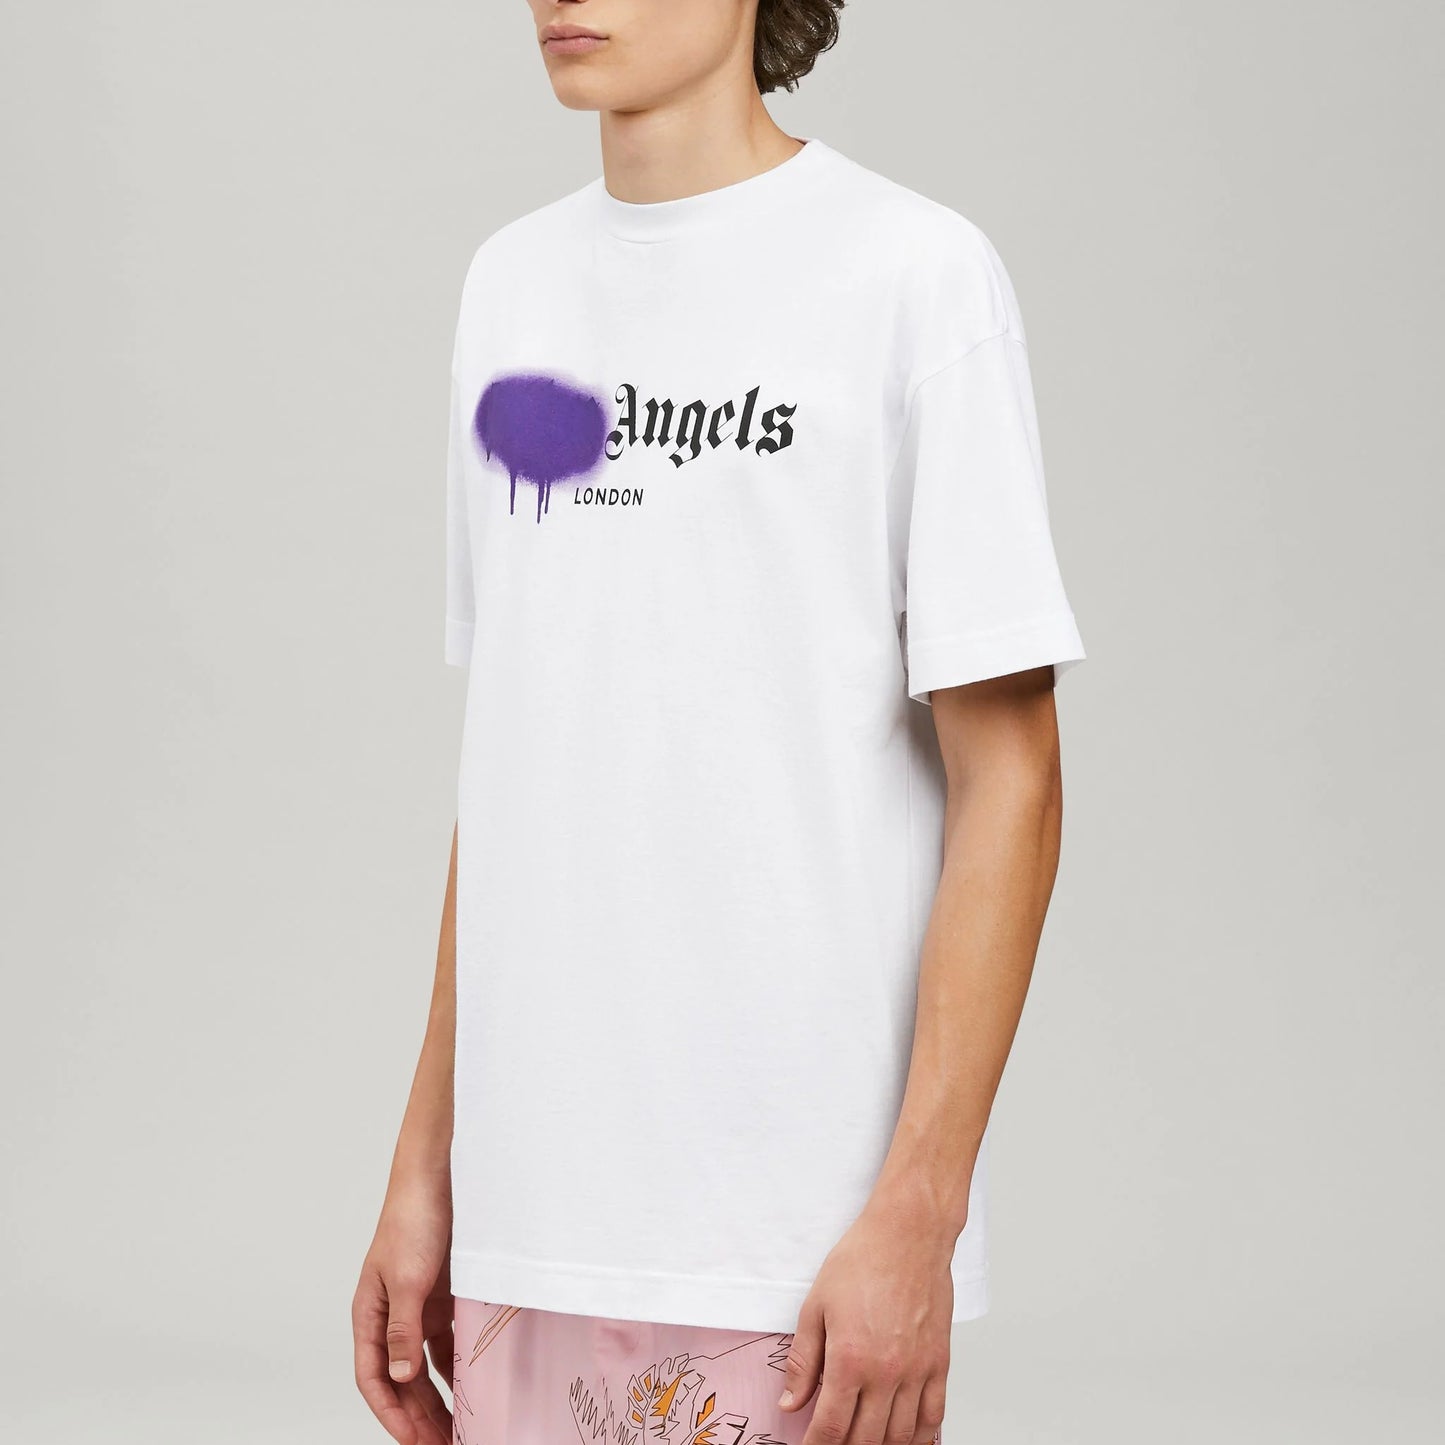 Palm Angels White Purple London Sprayed T-Shirt Left